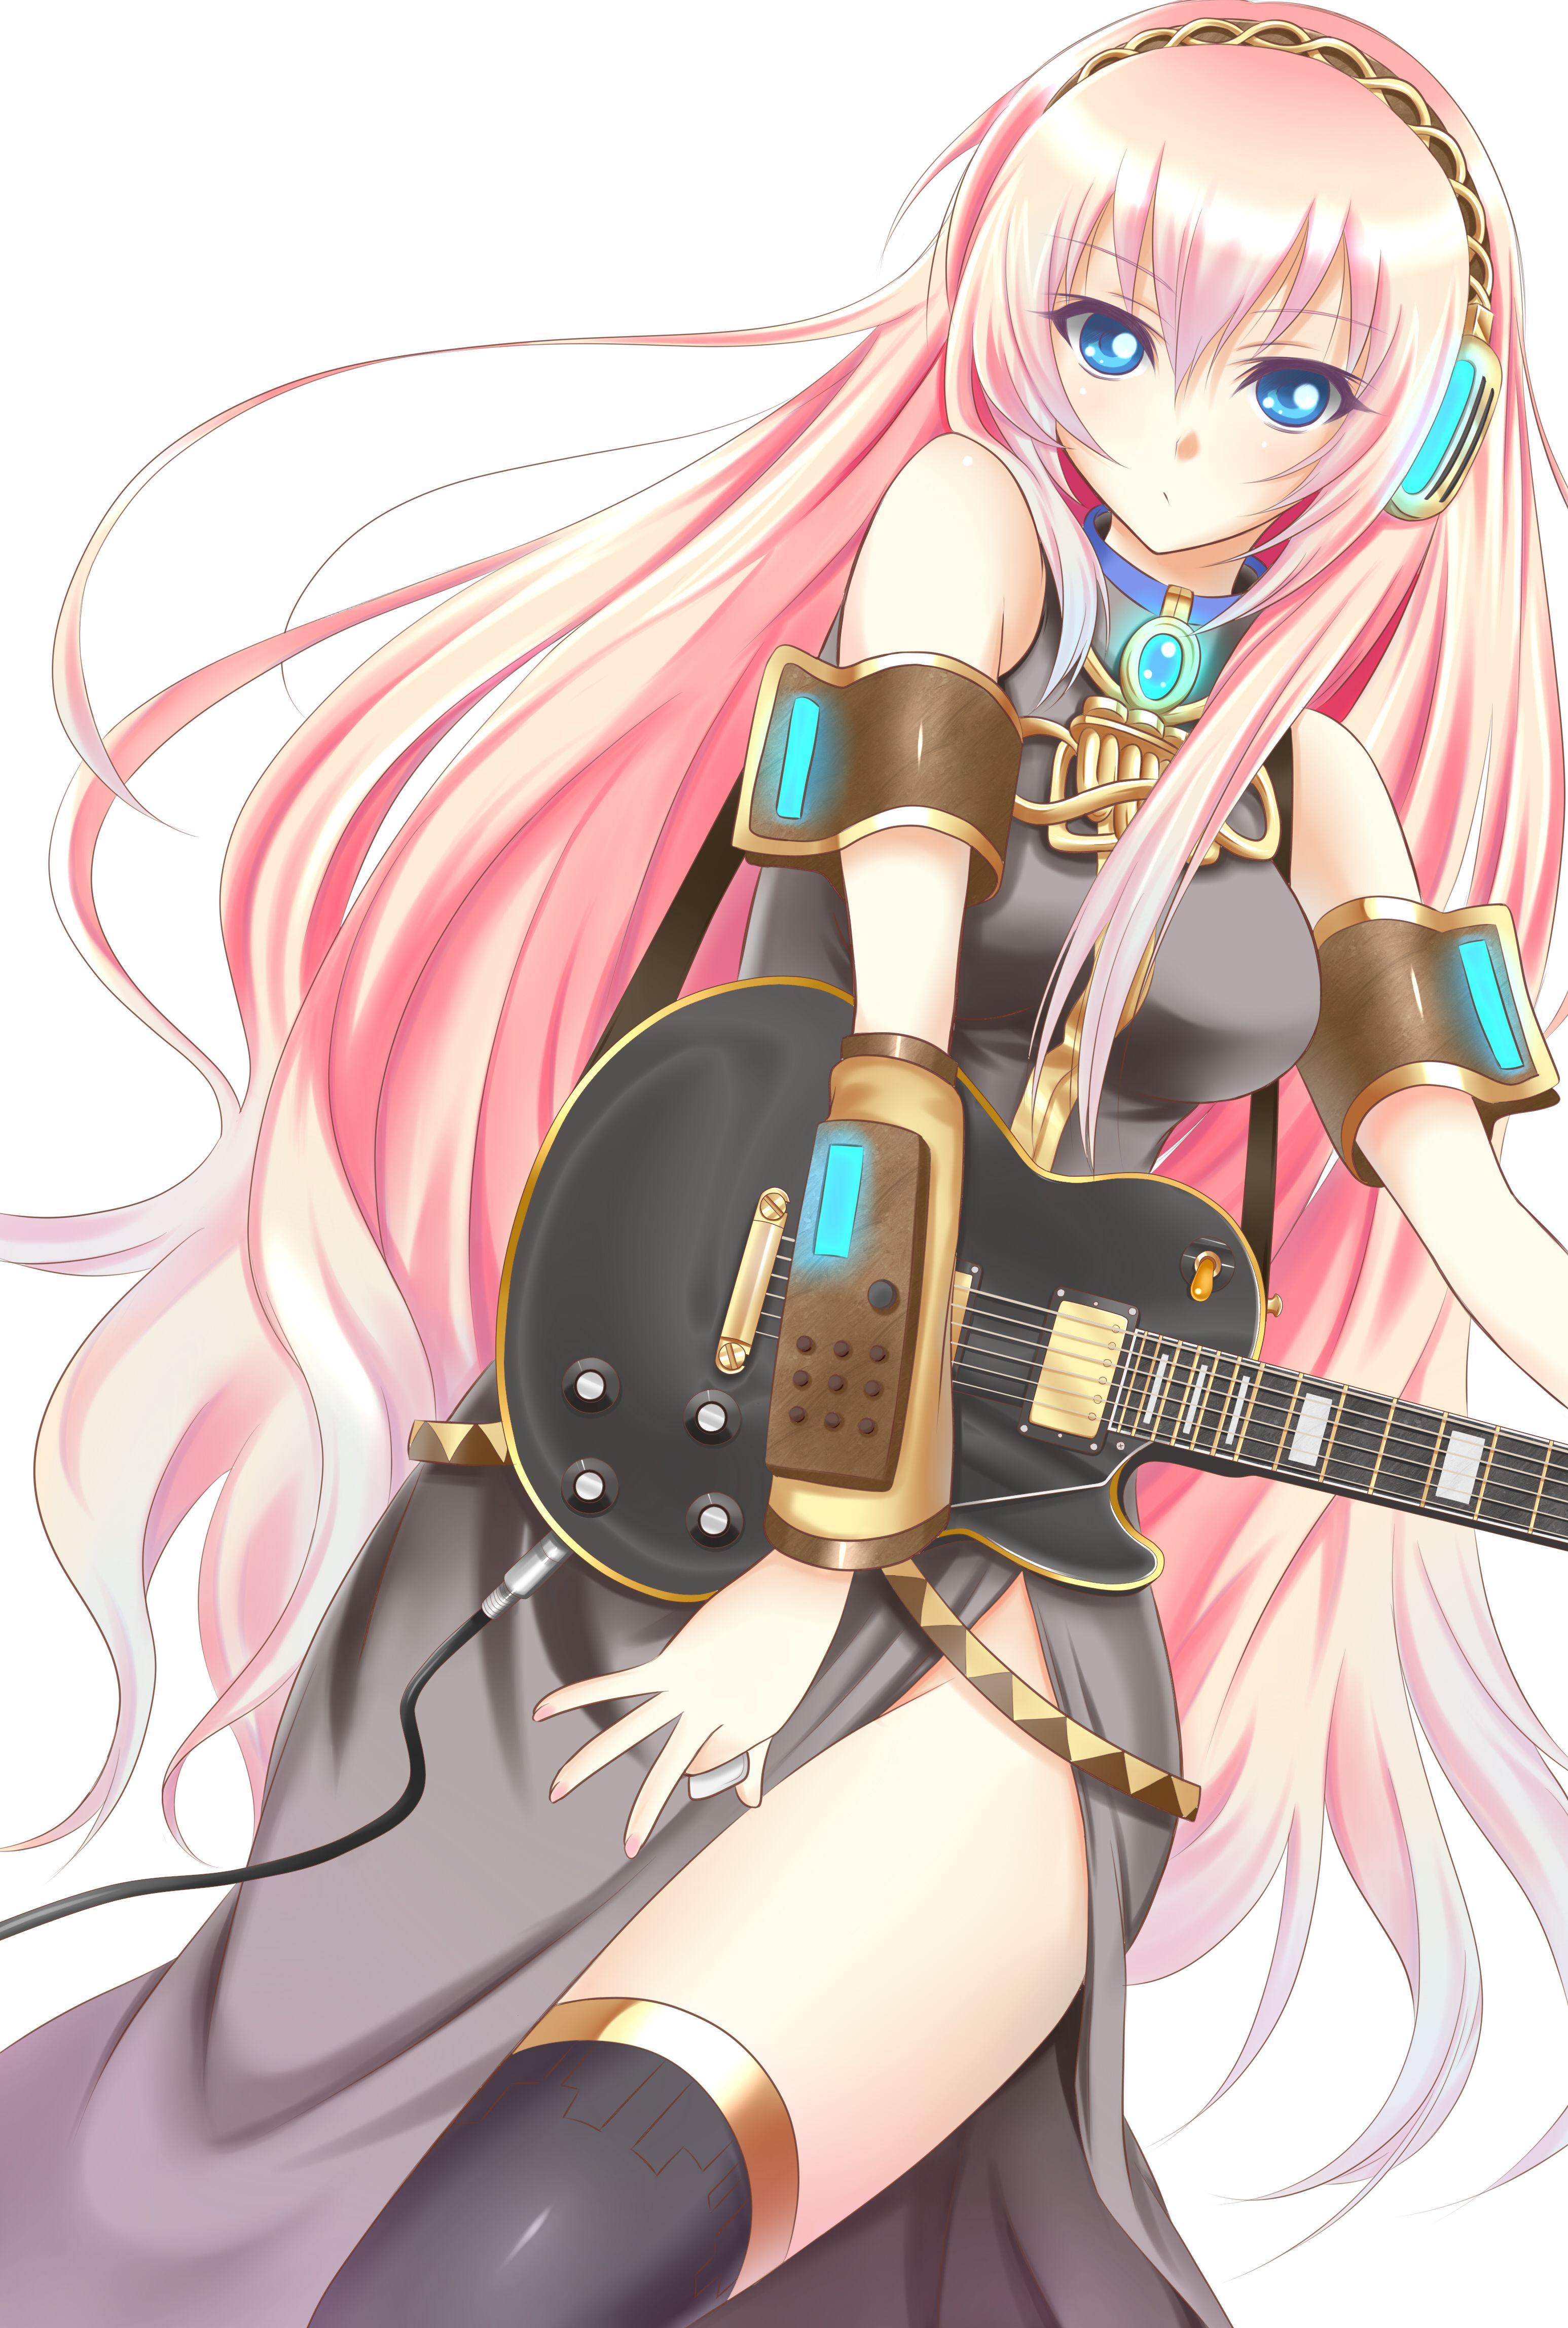 Megurine luka from Vocaloid 4K wallpaper download